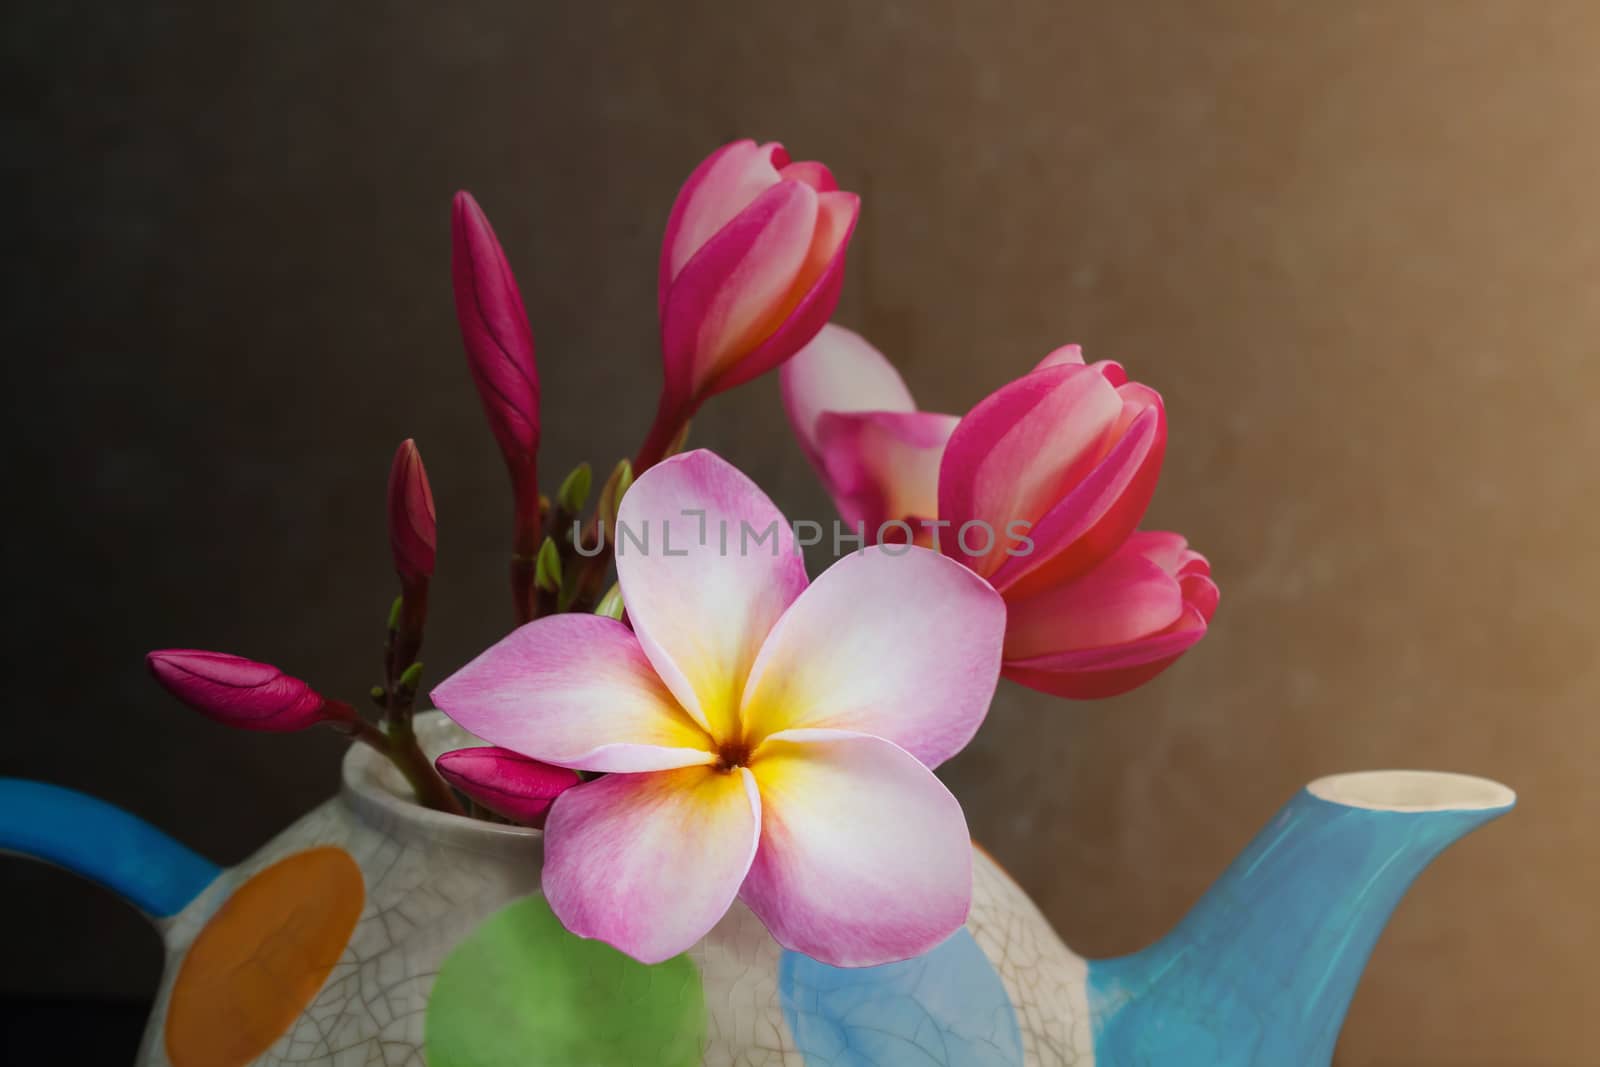 Lovely plumeria flower in colourful tea pot by KAZITAFAHNIZEER